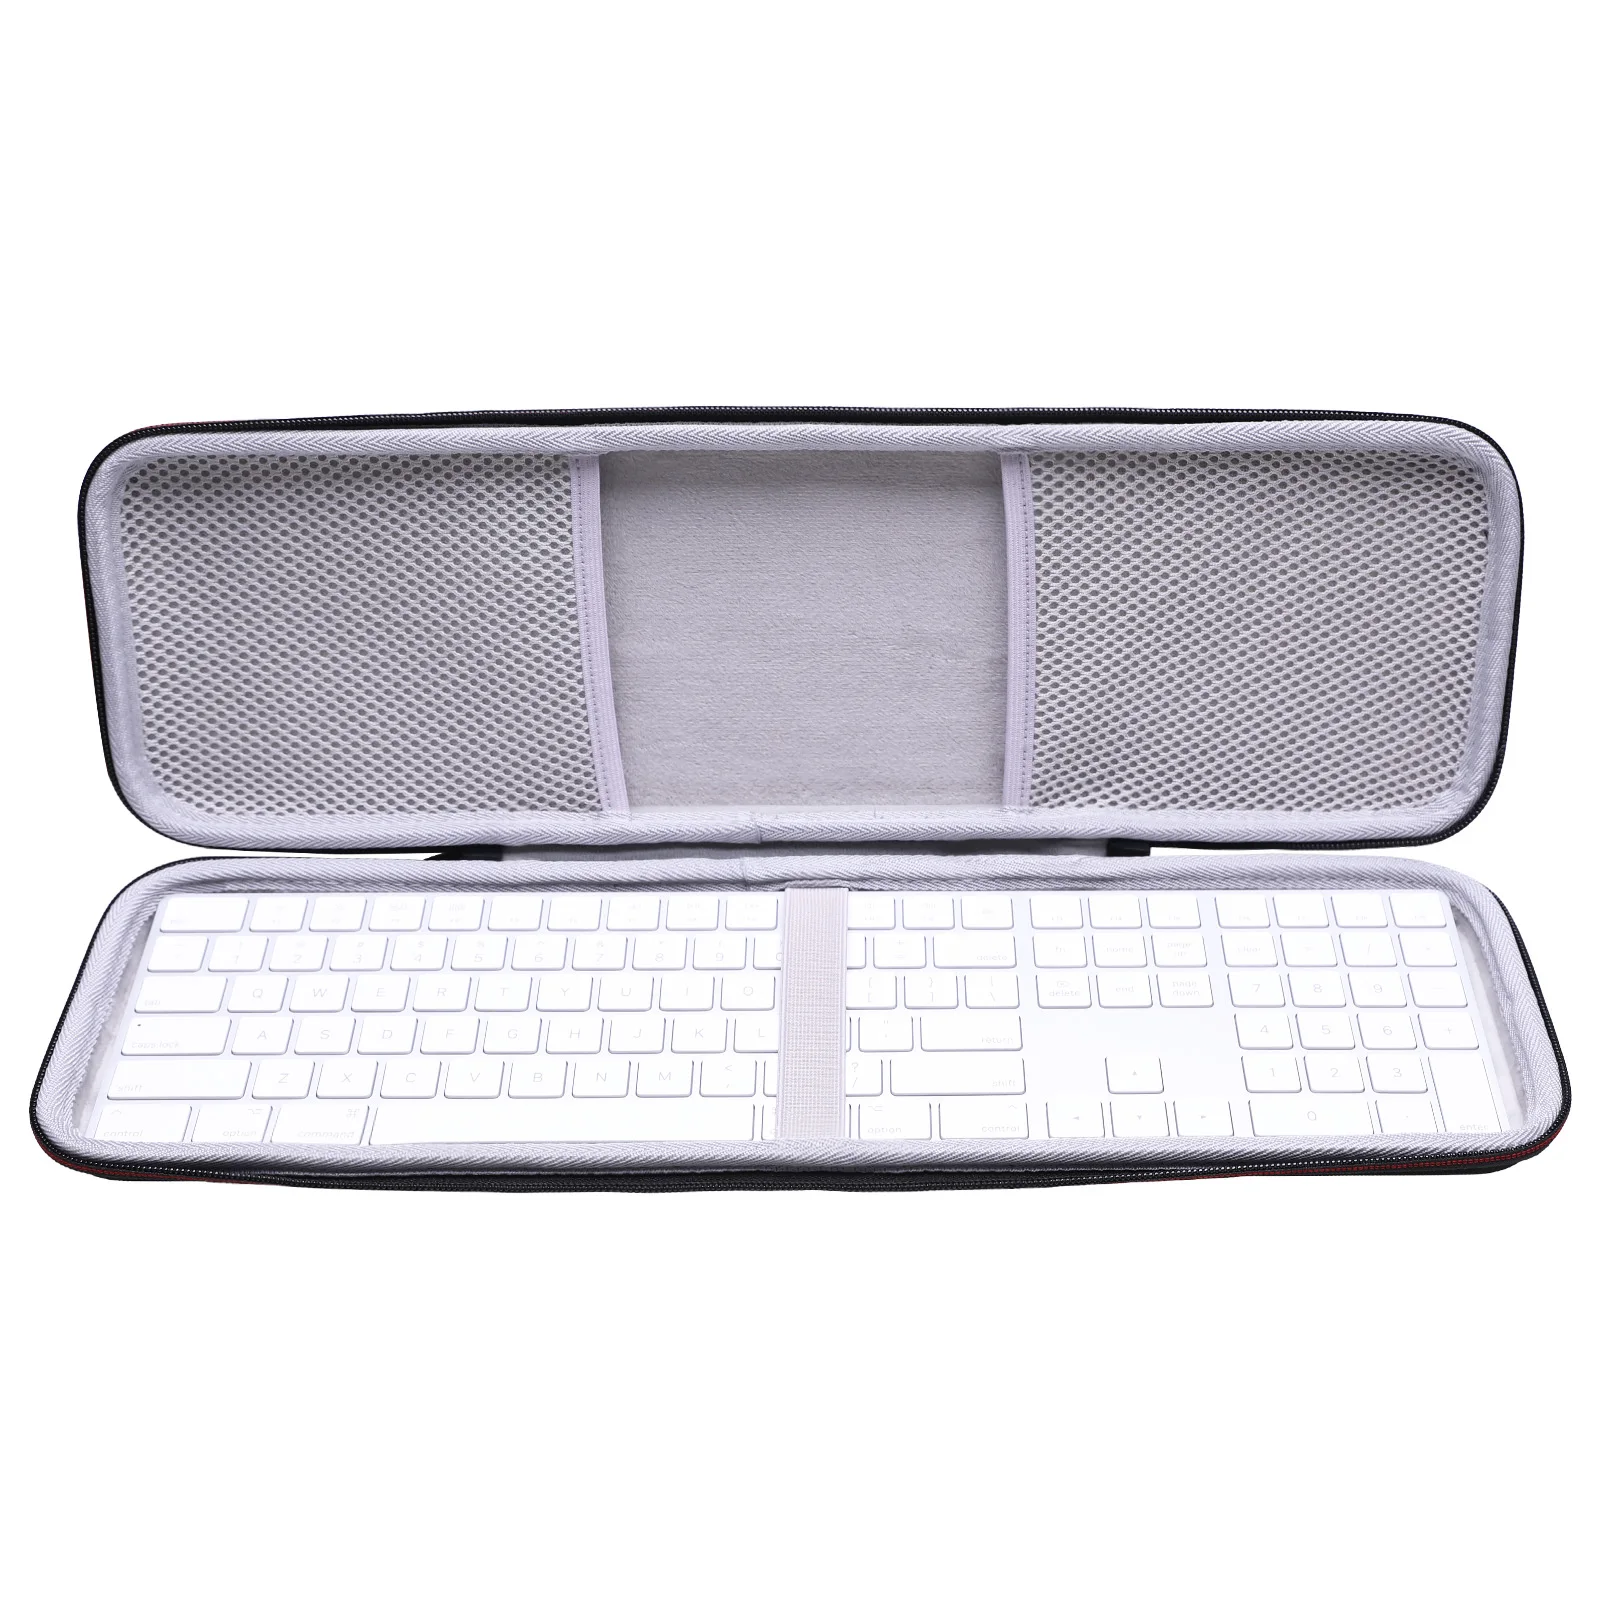 ltgem-eva-hard-case-for-apple-magic-keyboard-with-numeric-keypad-wireless-rechargable-us-english--silver